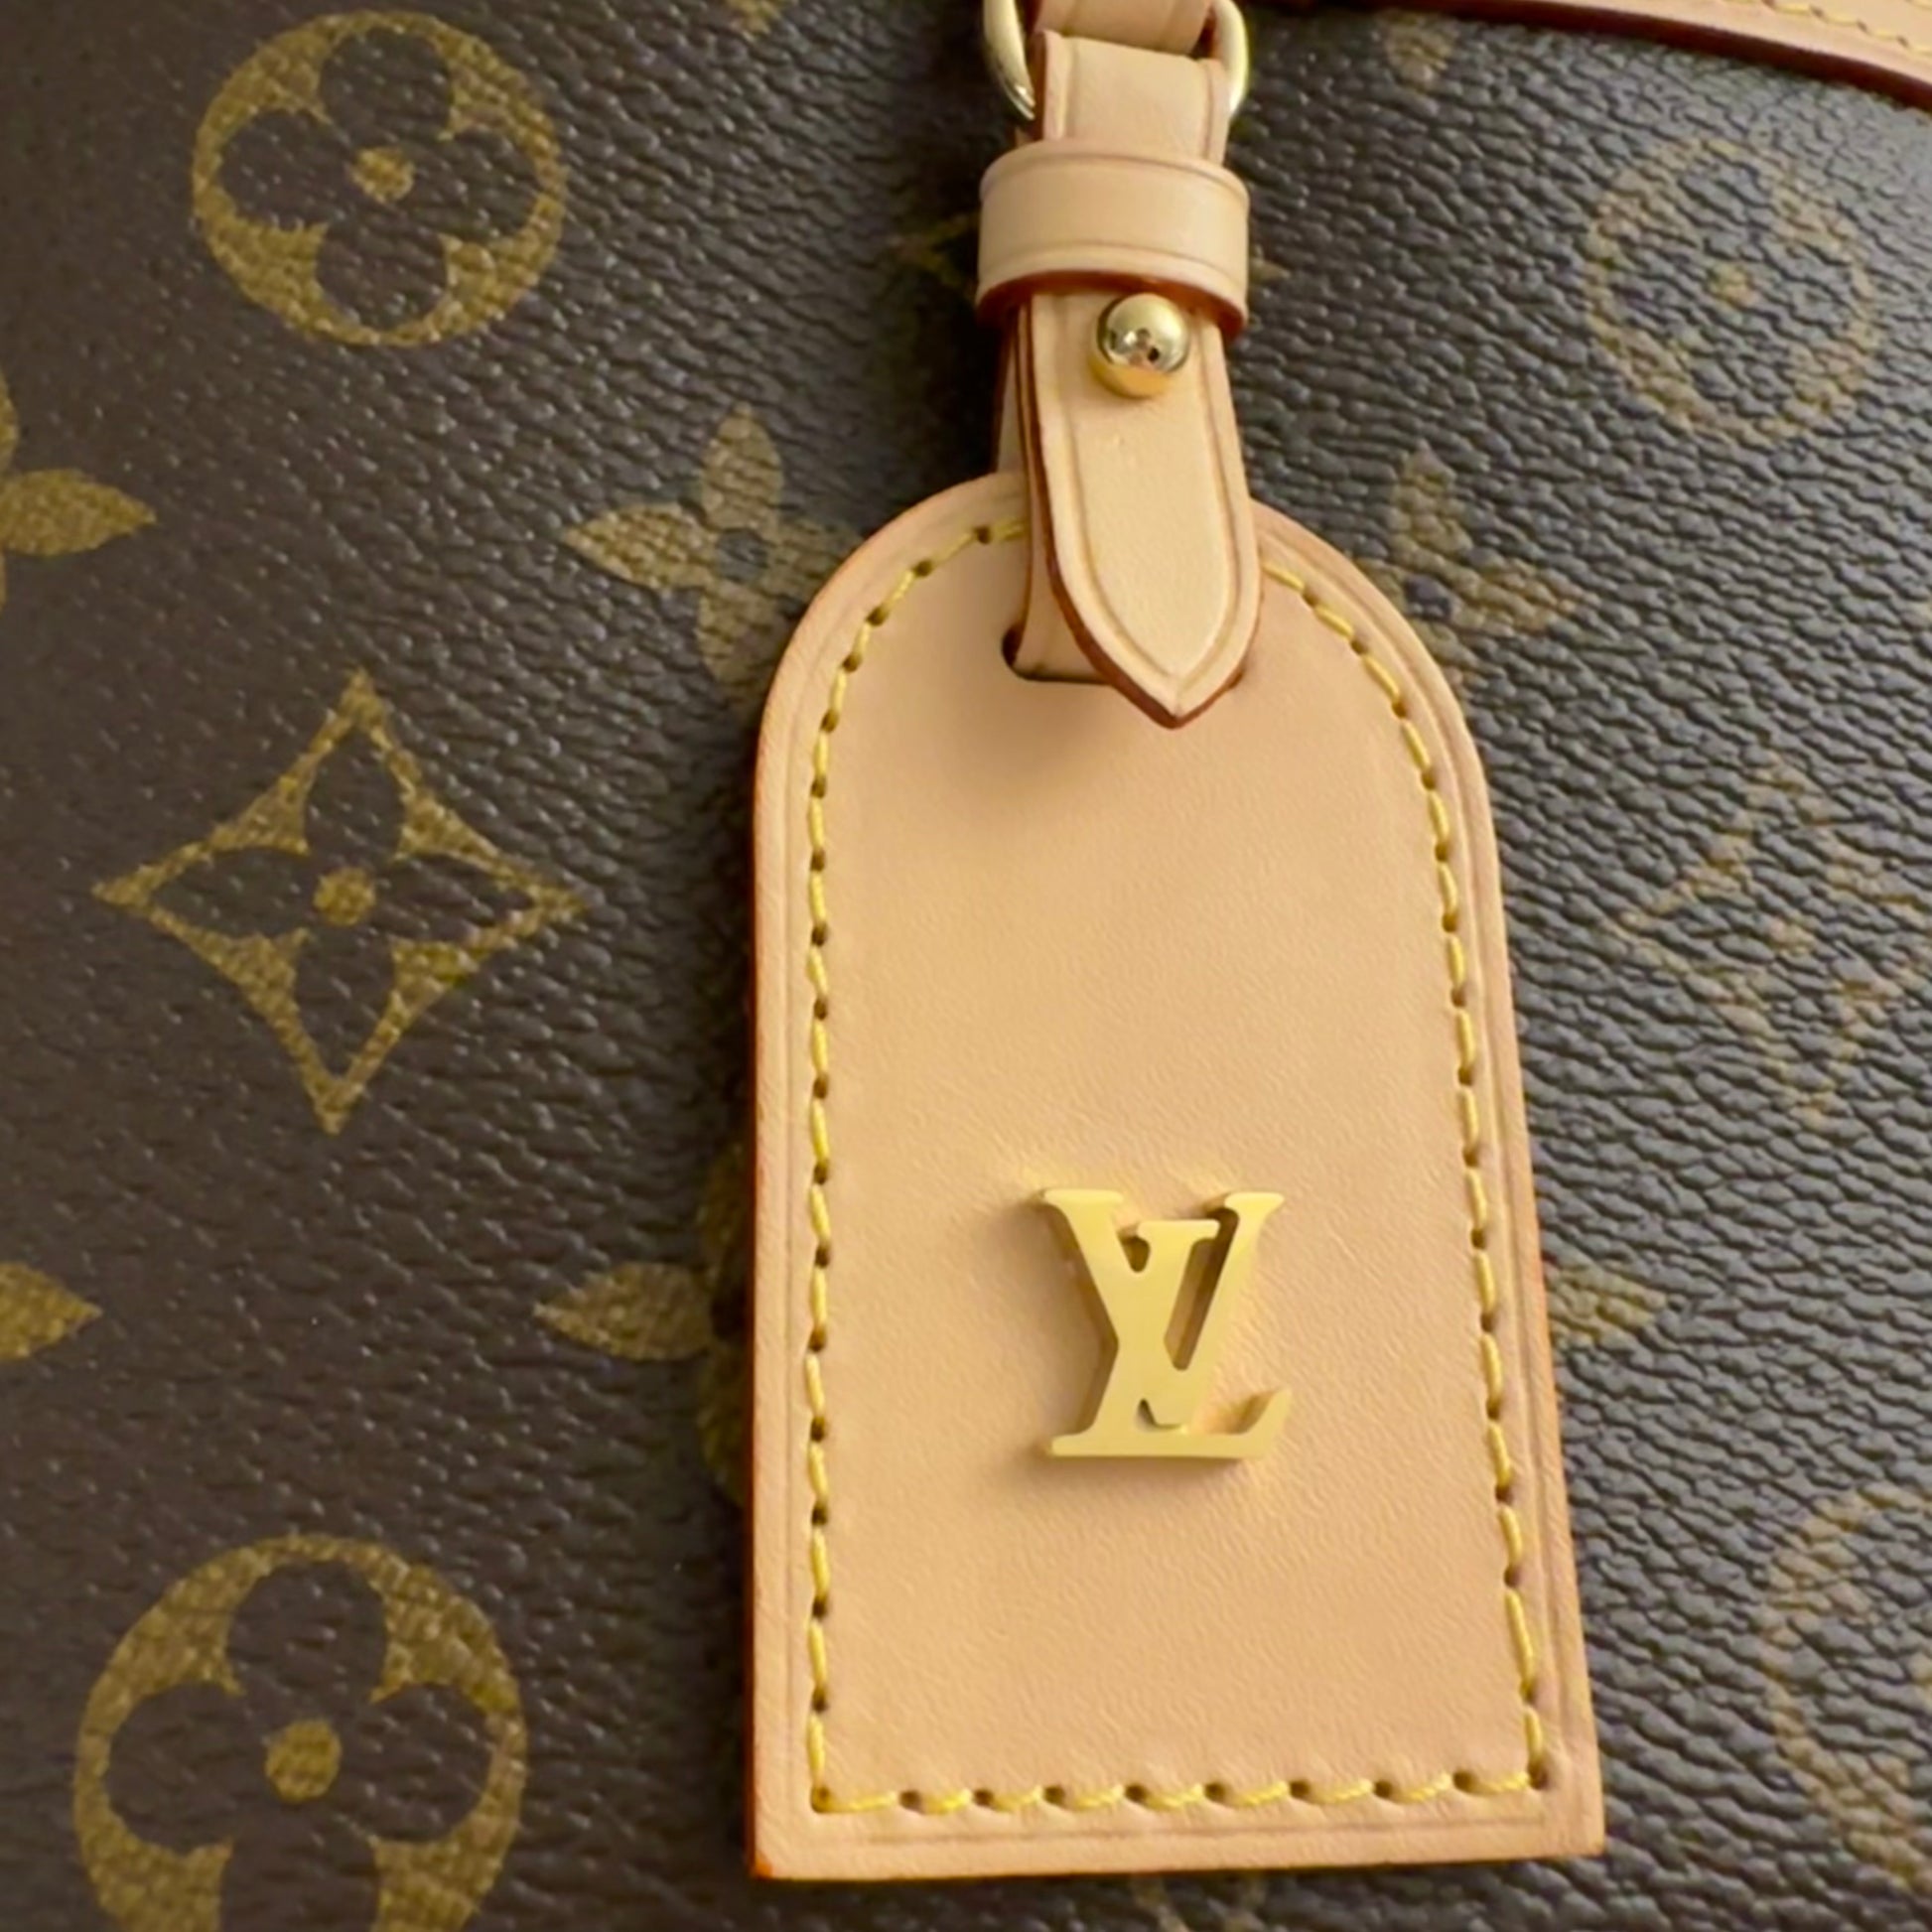 Louis Vuitton Bumbag in Brown Monogram w/ Designer Box and Dust